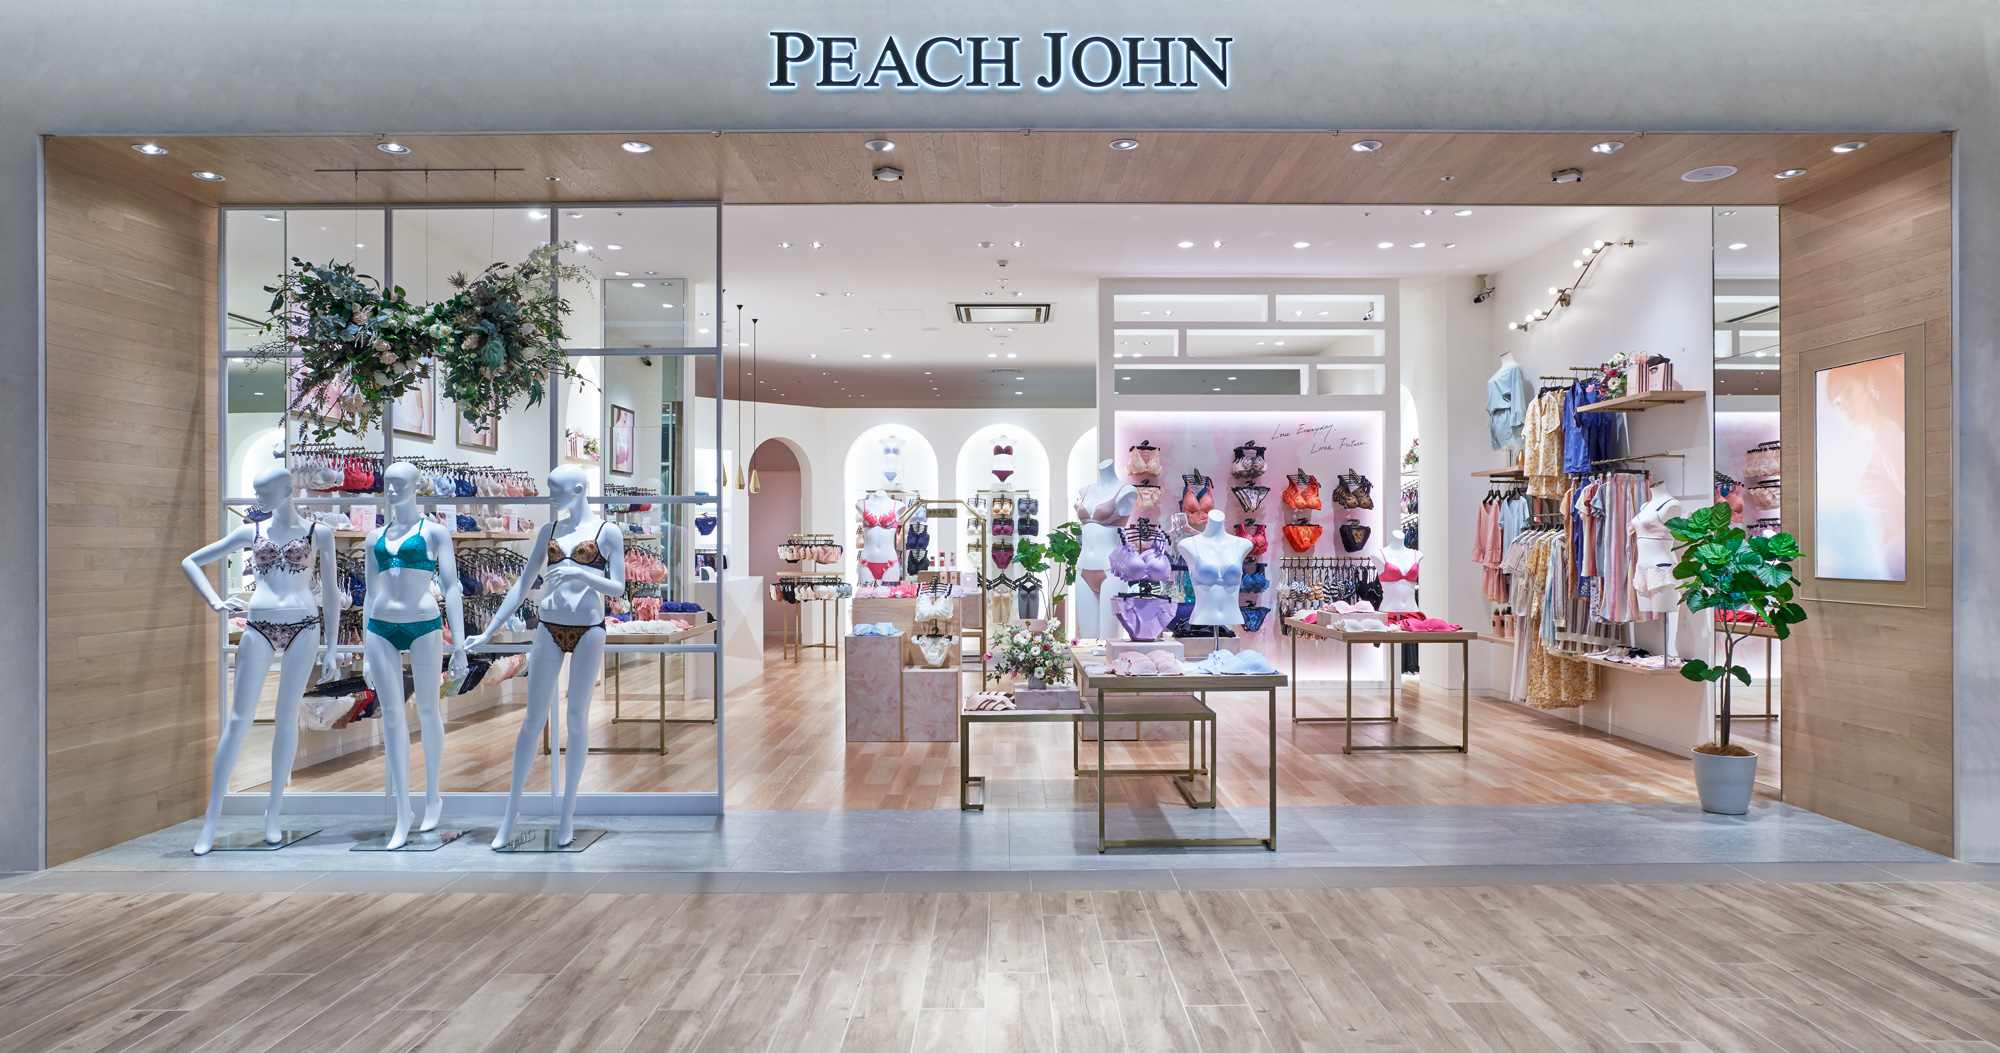 Peach Johnが沖縄に初上陸 Parco City に直営店を6月27日 木 Open 株式会社ピーチ ジョンのプレスリリース